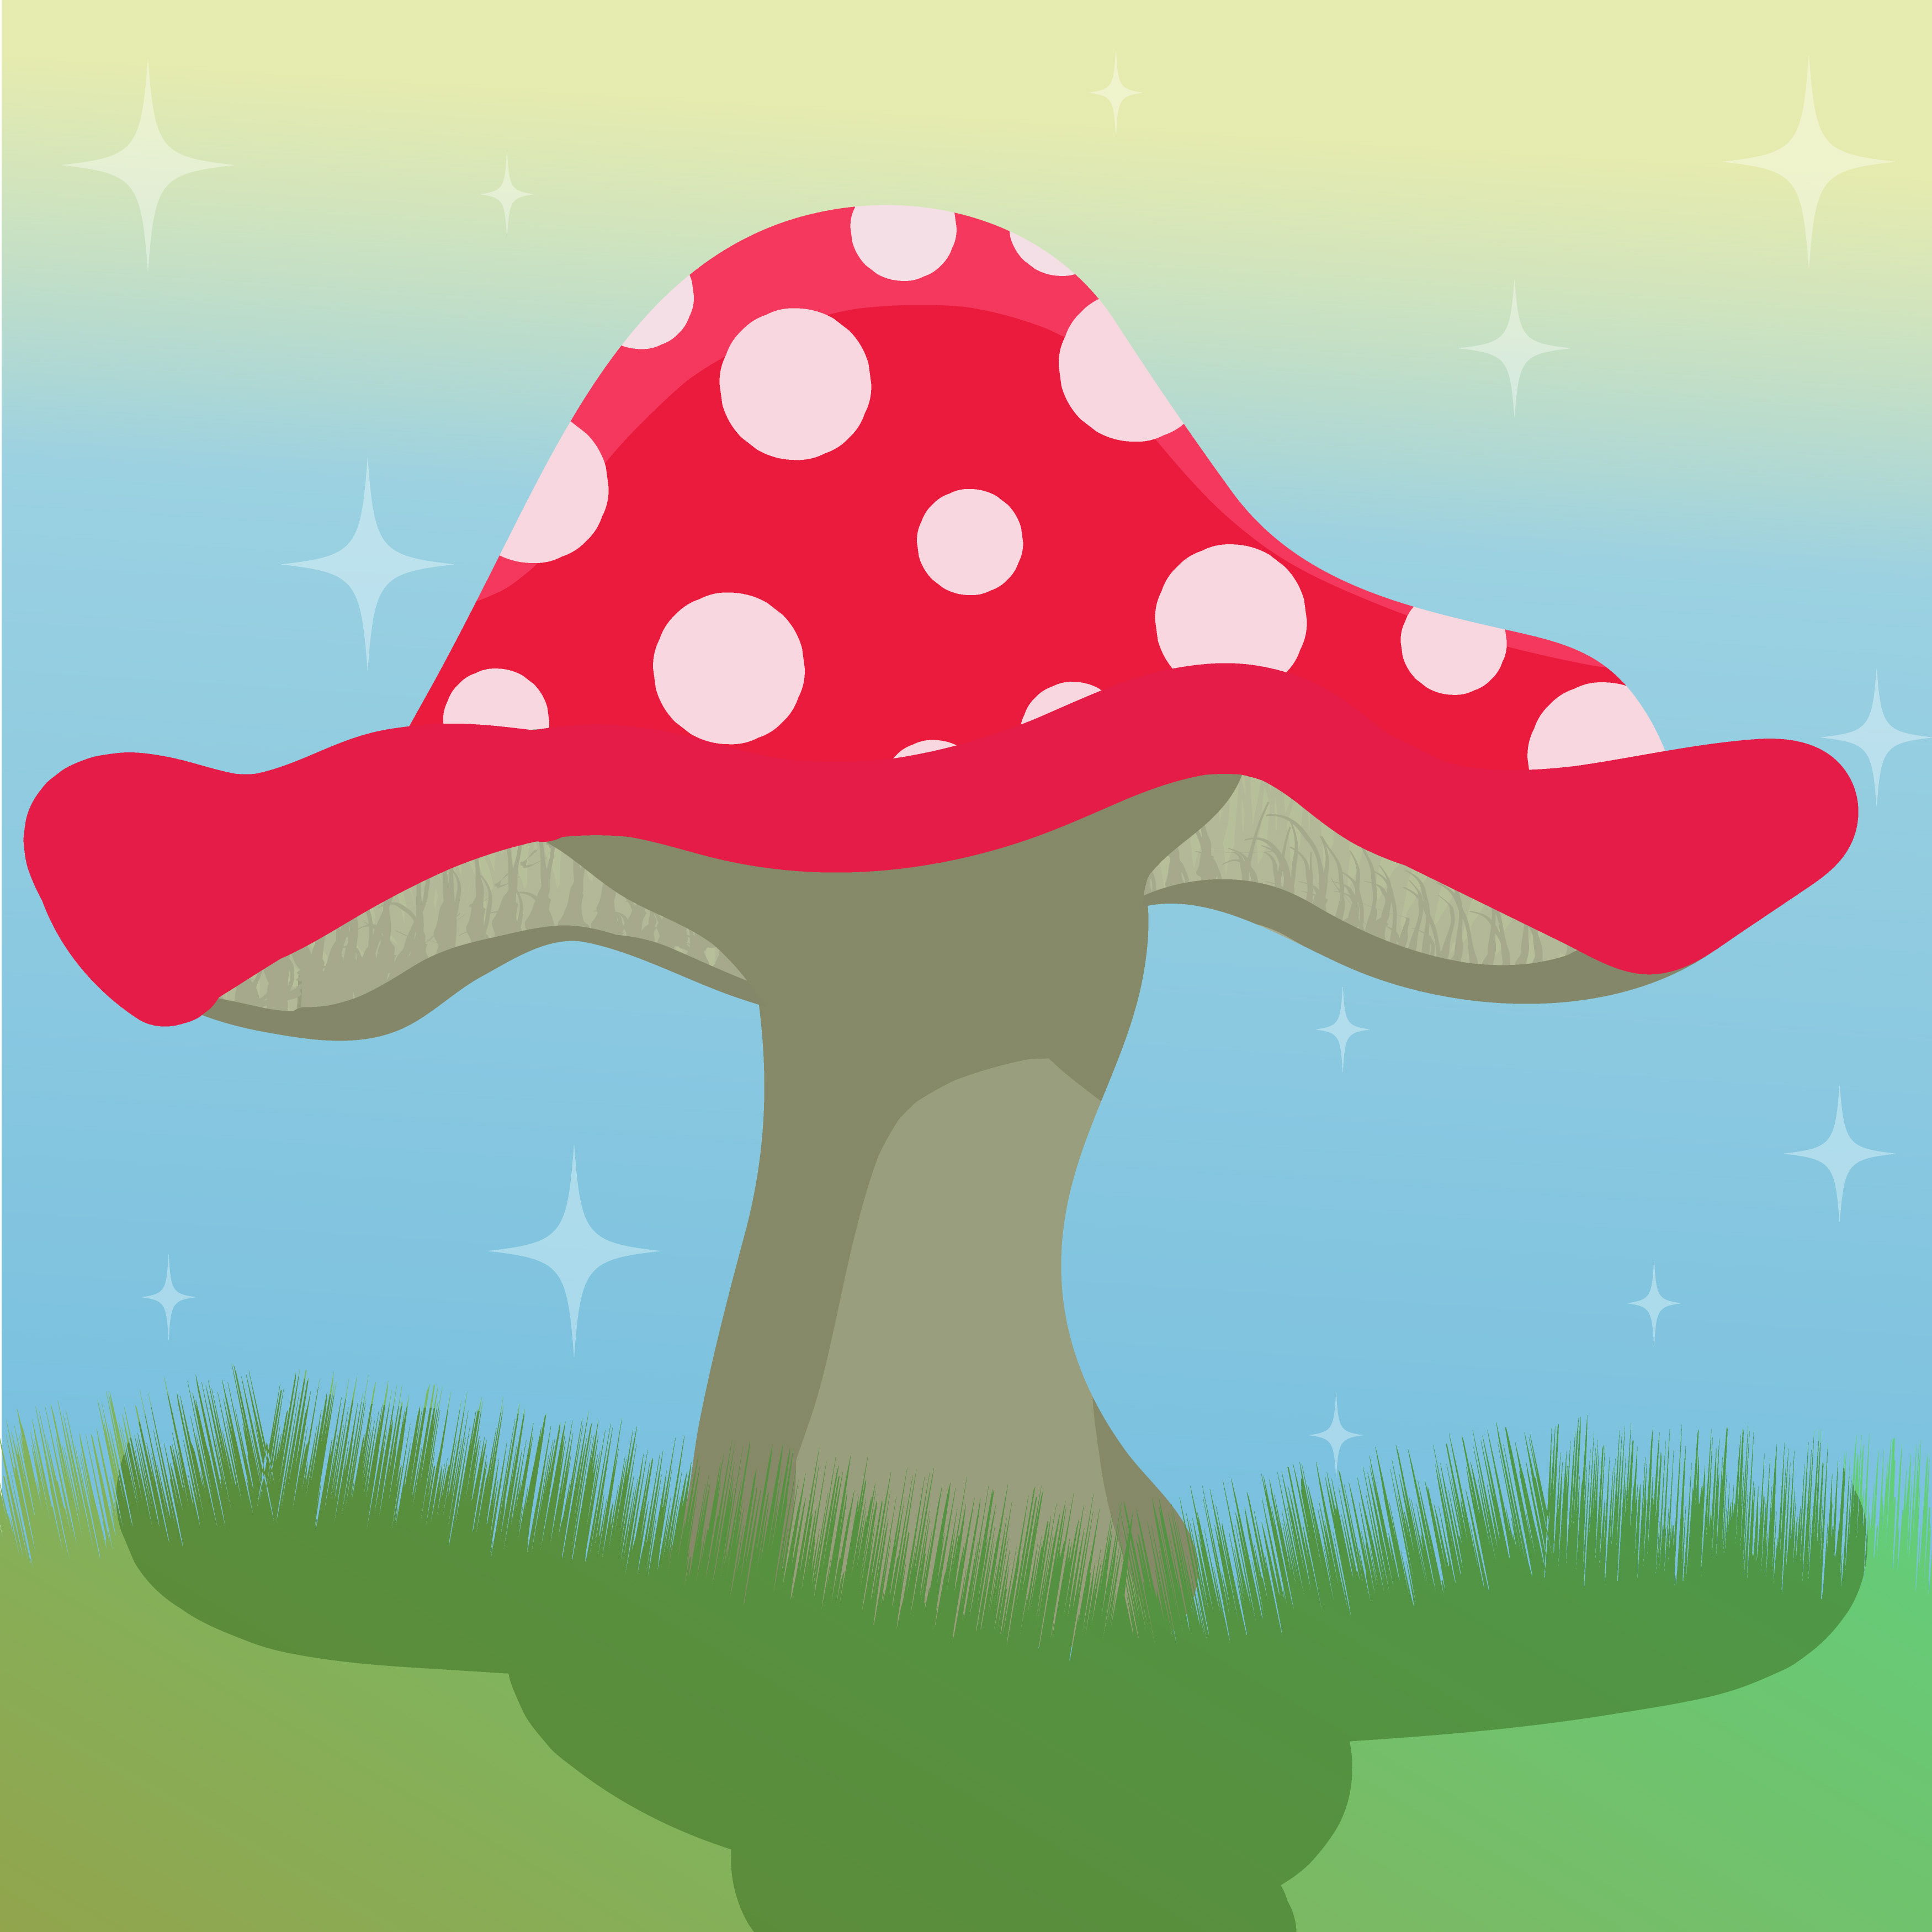 Mushroom of a magic land rendition image